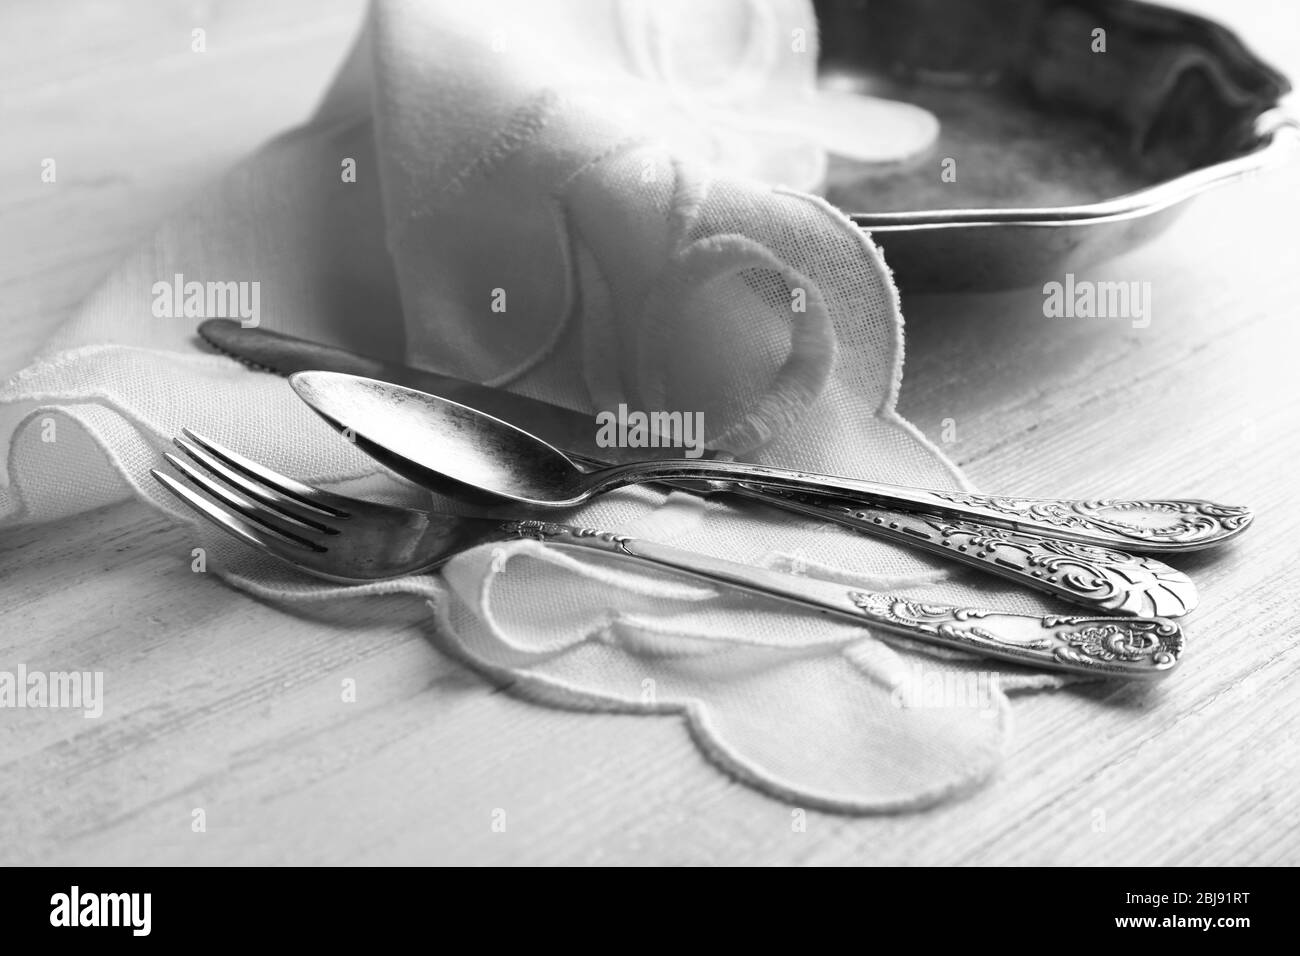 Set of dinnerware on wooden table Stock Photo